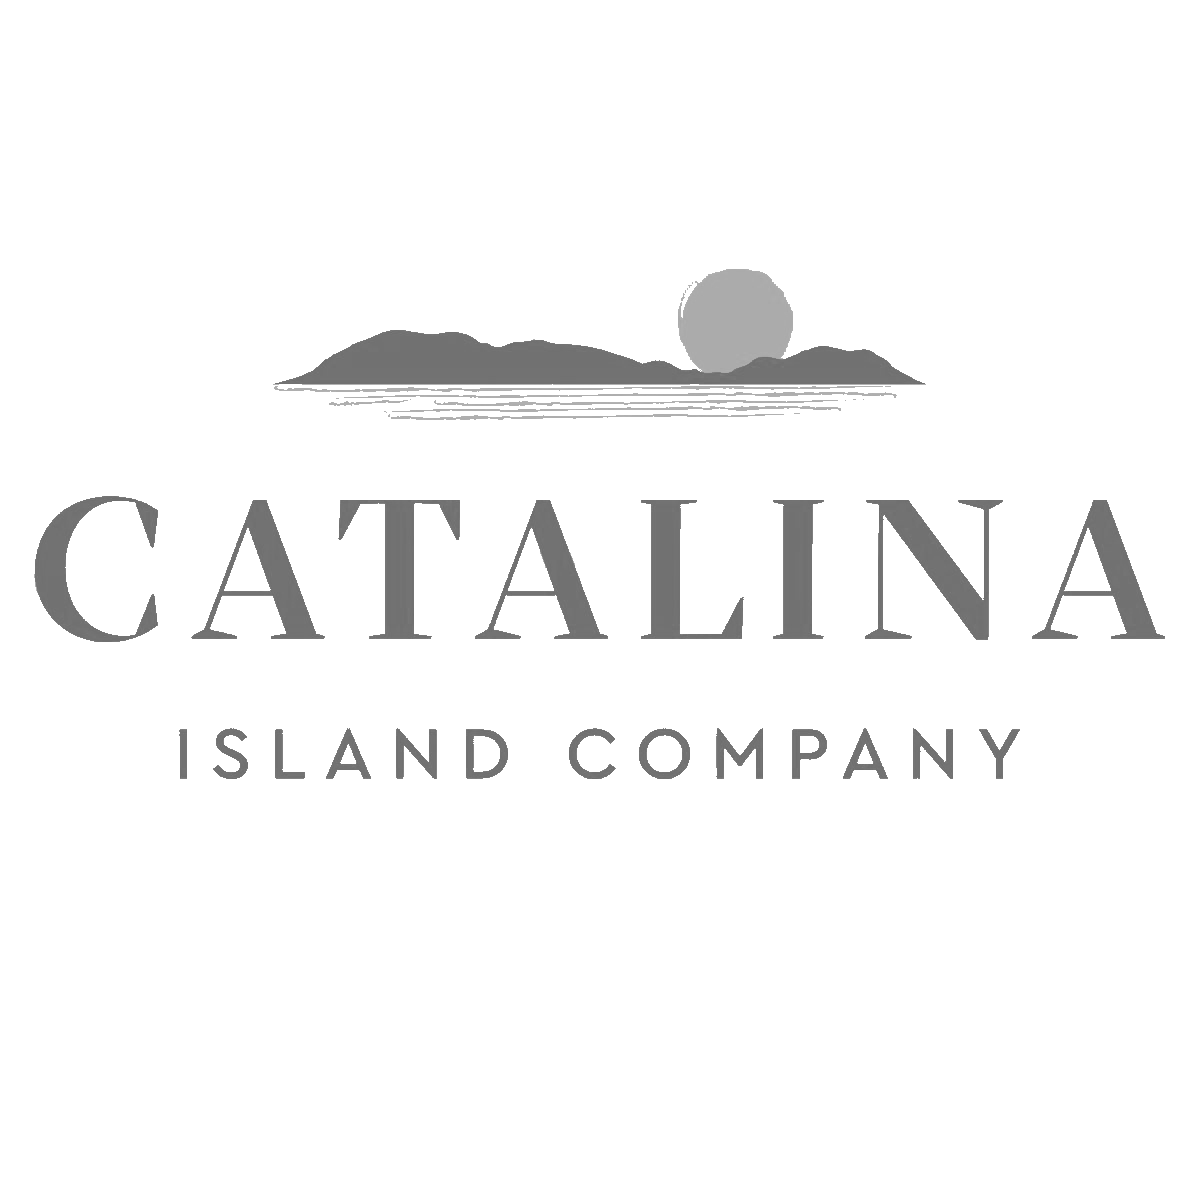 COM - Catalina Island Company.png